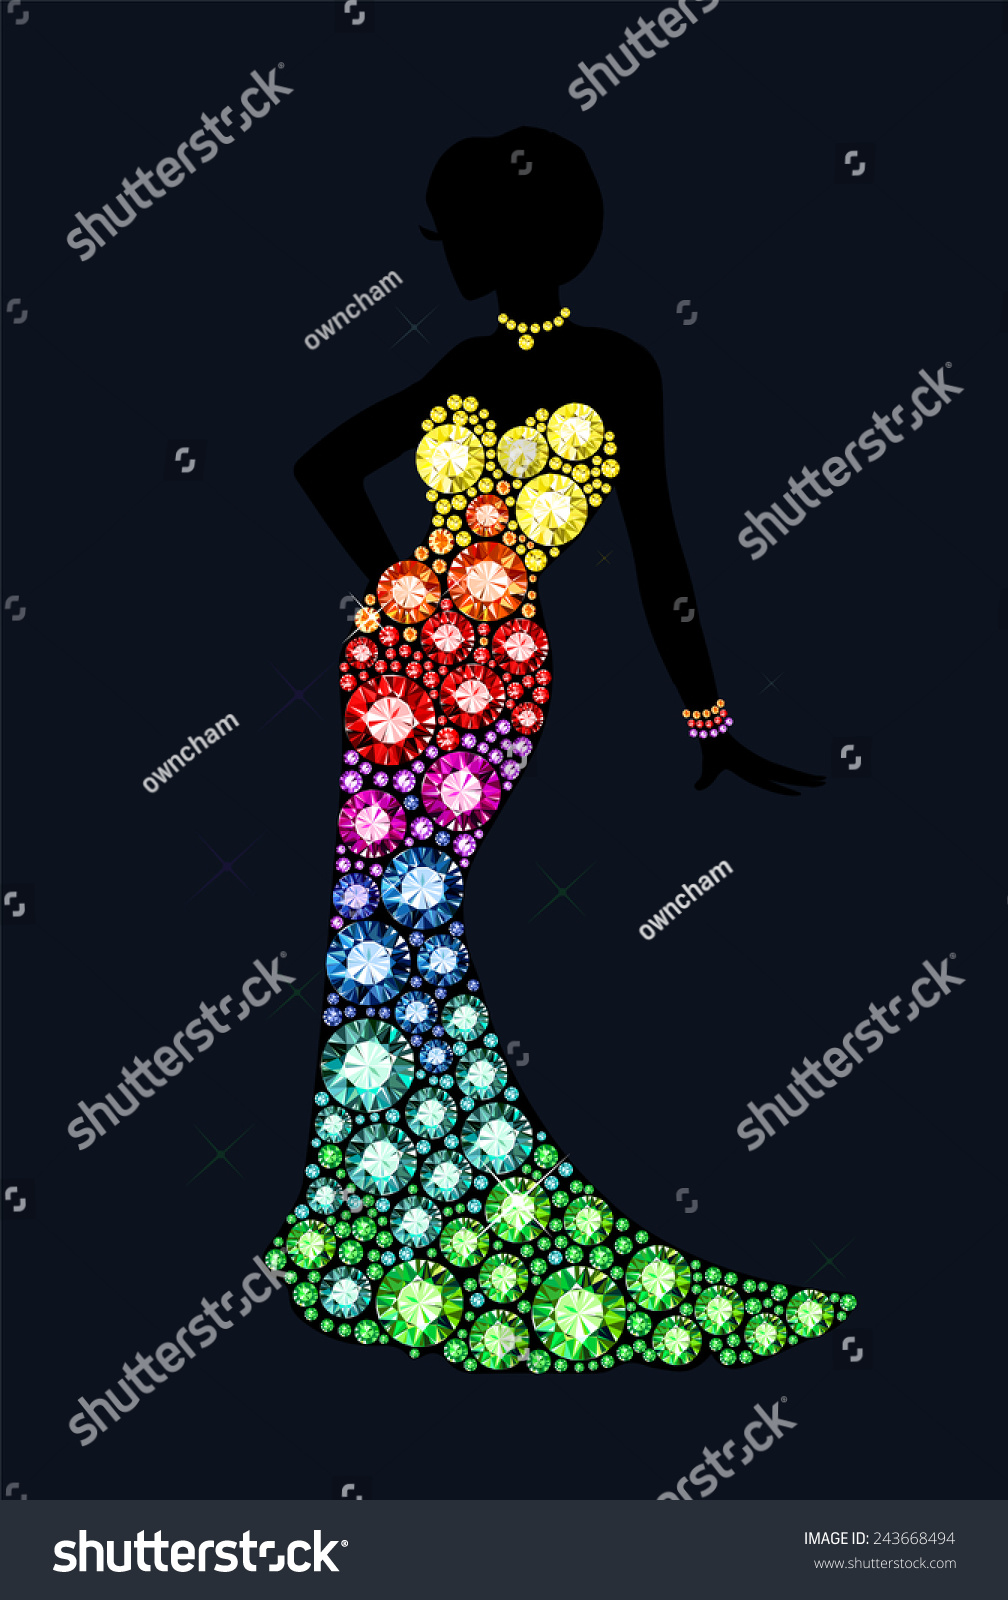 SVG of dress made of shiny gems svg